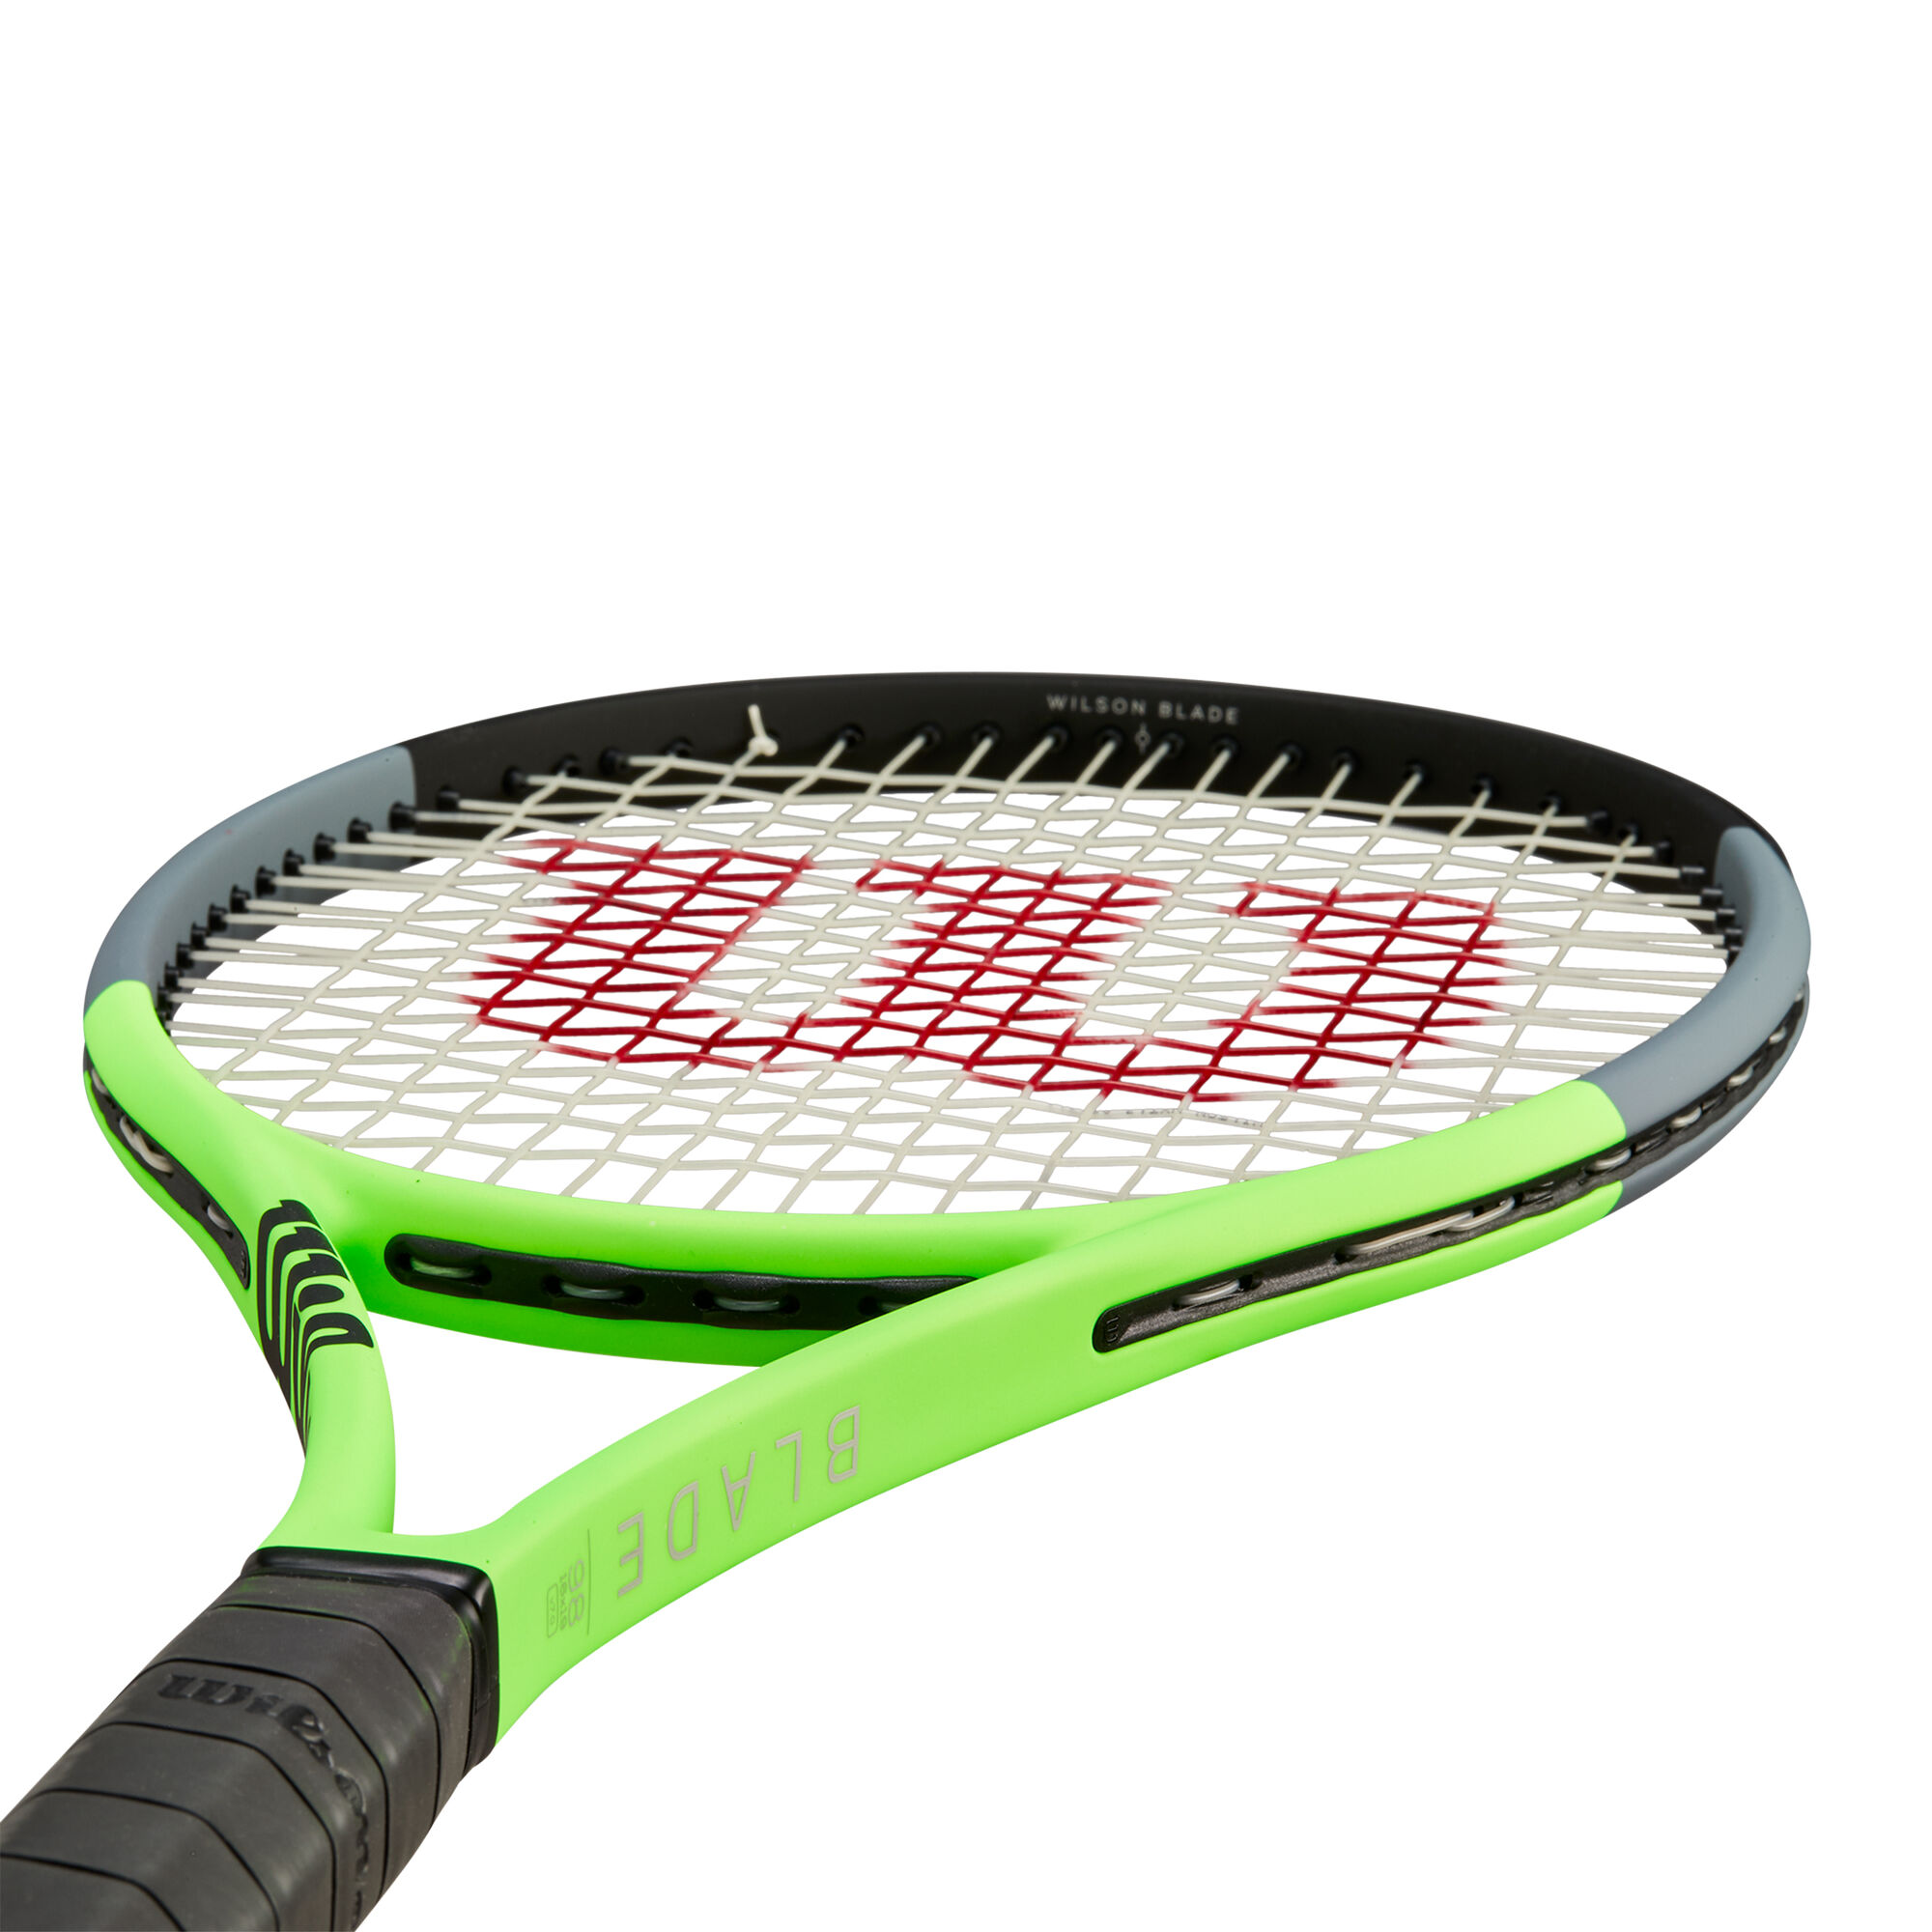 binding Achterhouden hengel buy Wilson Blade 98 16x19 V7.0 Reverse Tour Racket online | Tennis-Point